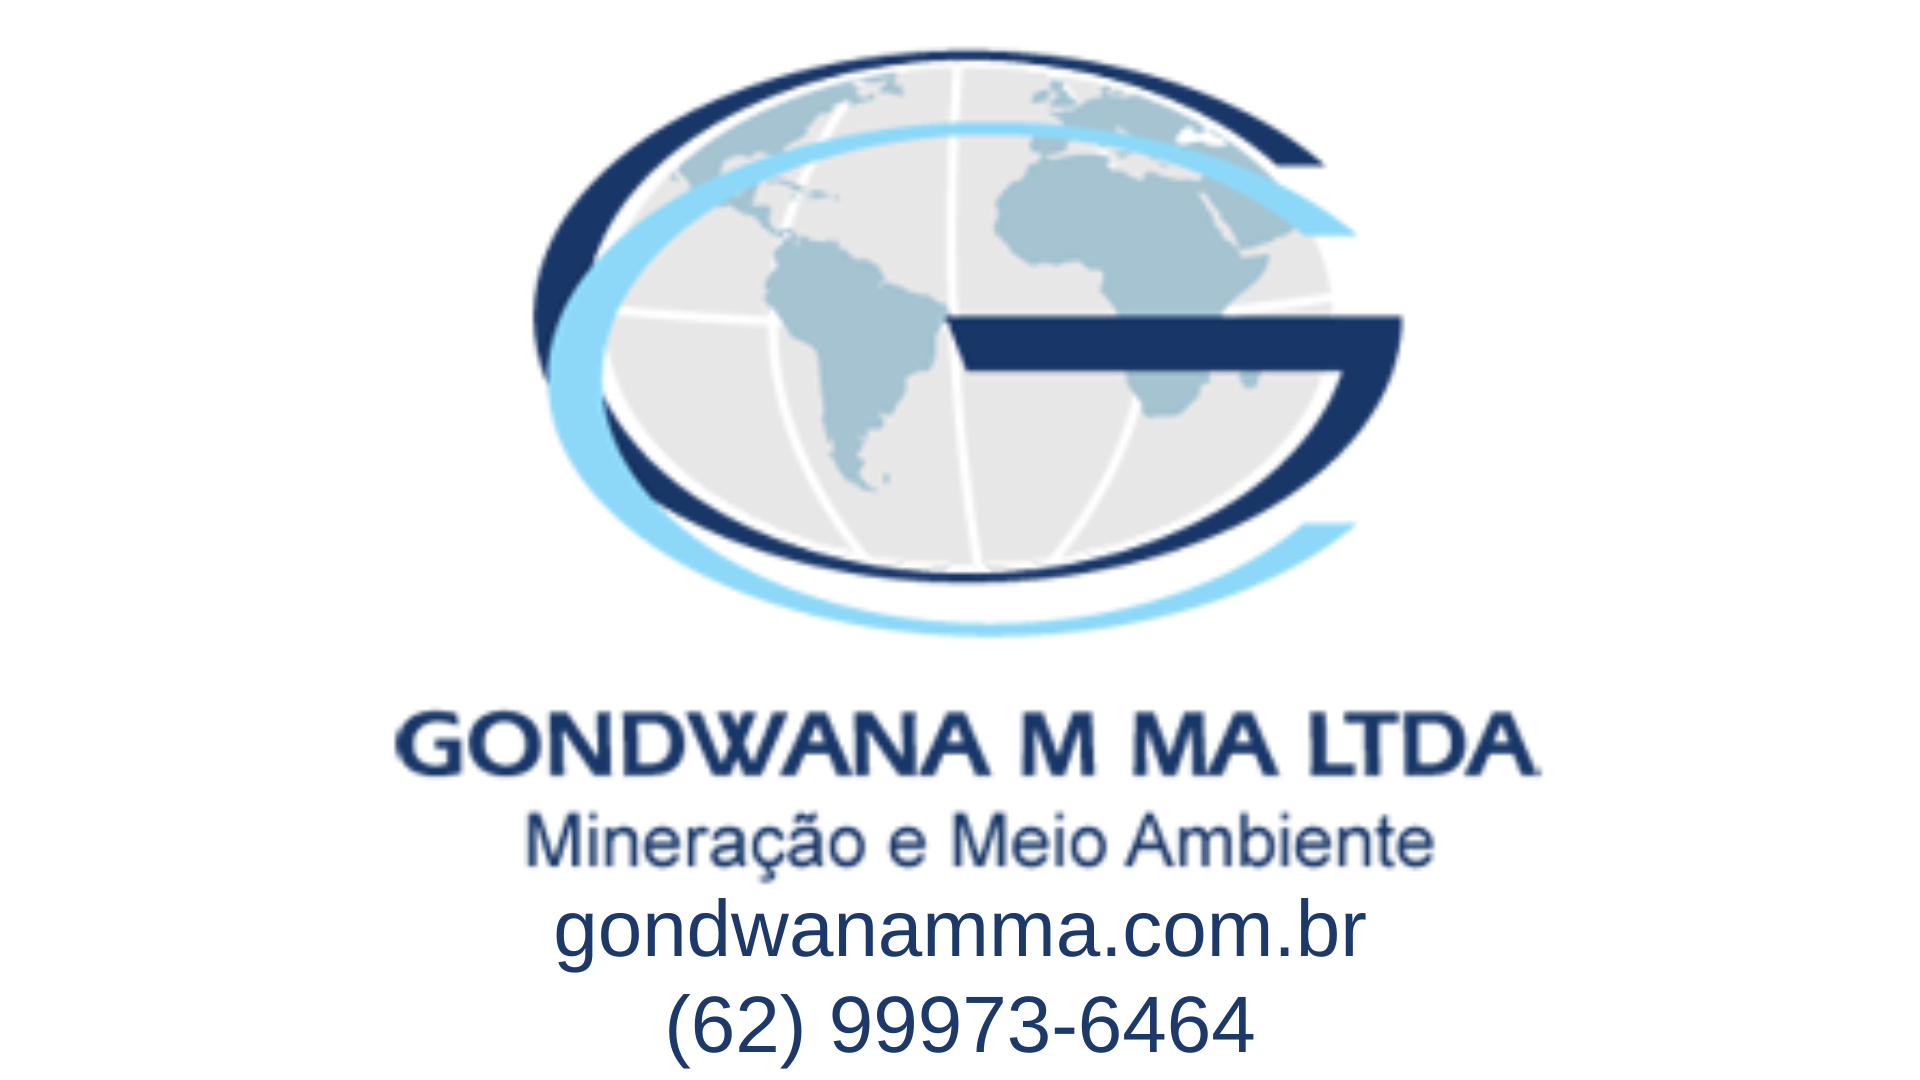 gondwana parceiros-2